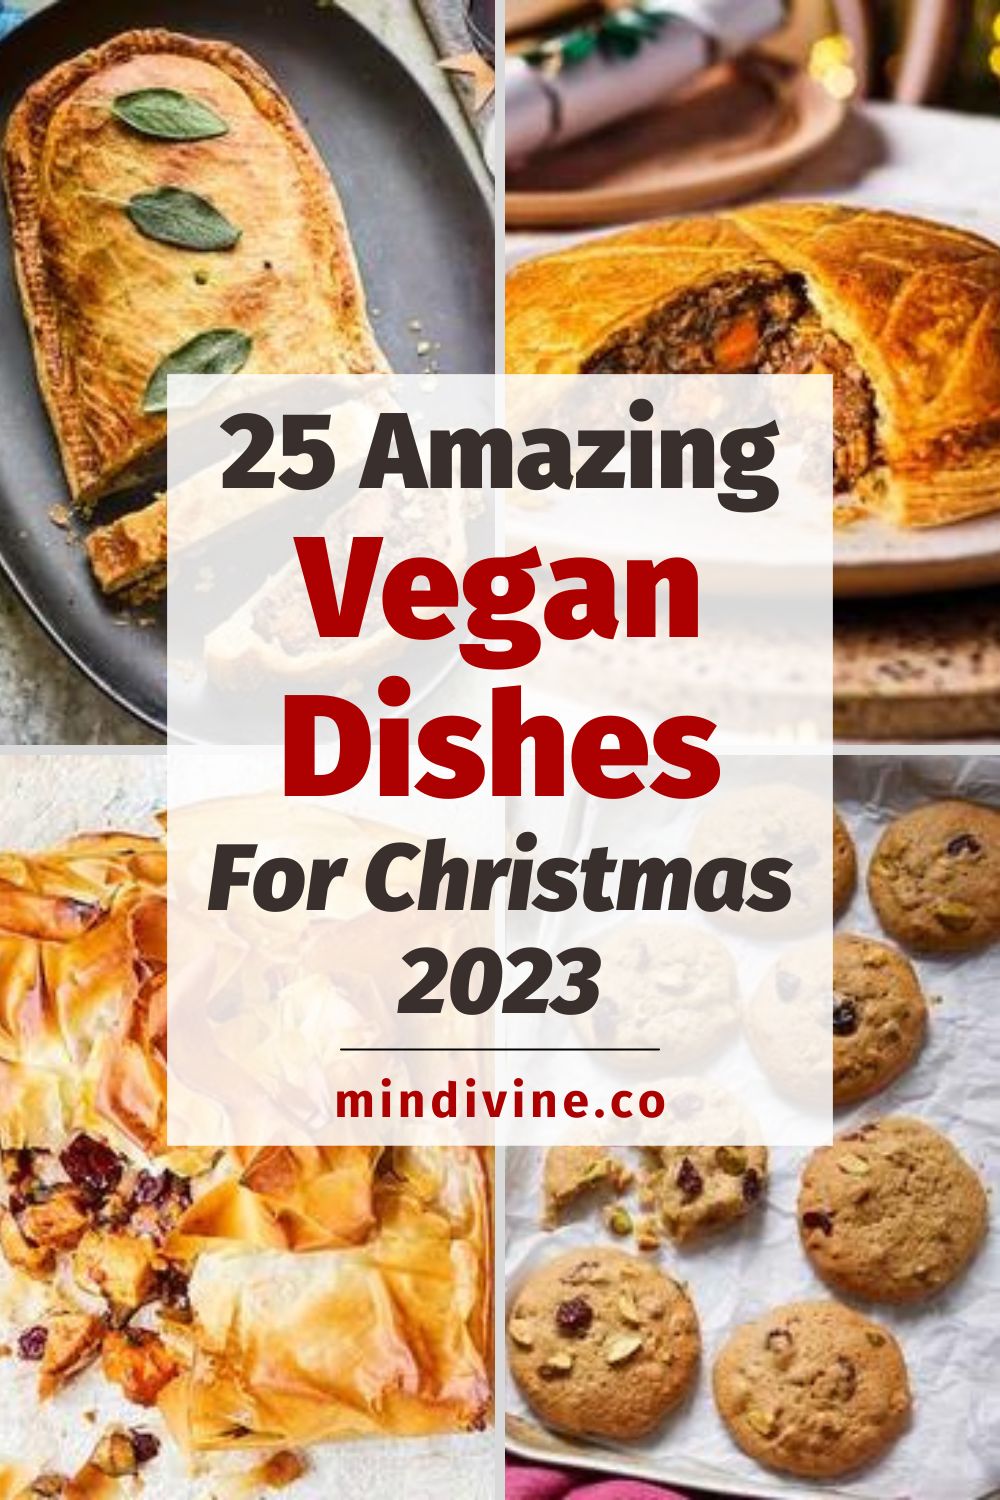 4 photos with delicious vegan Christmas recipes